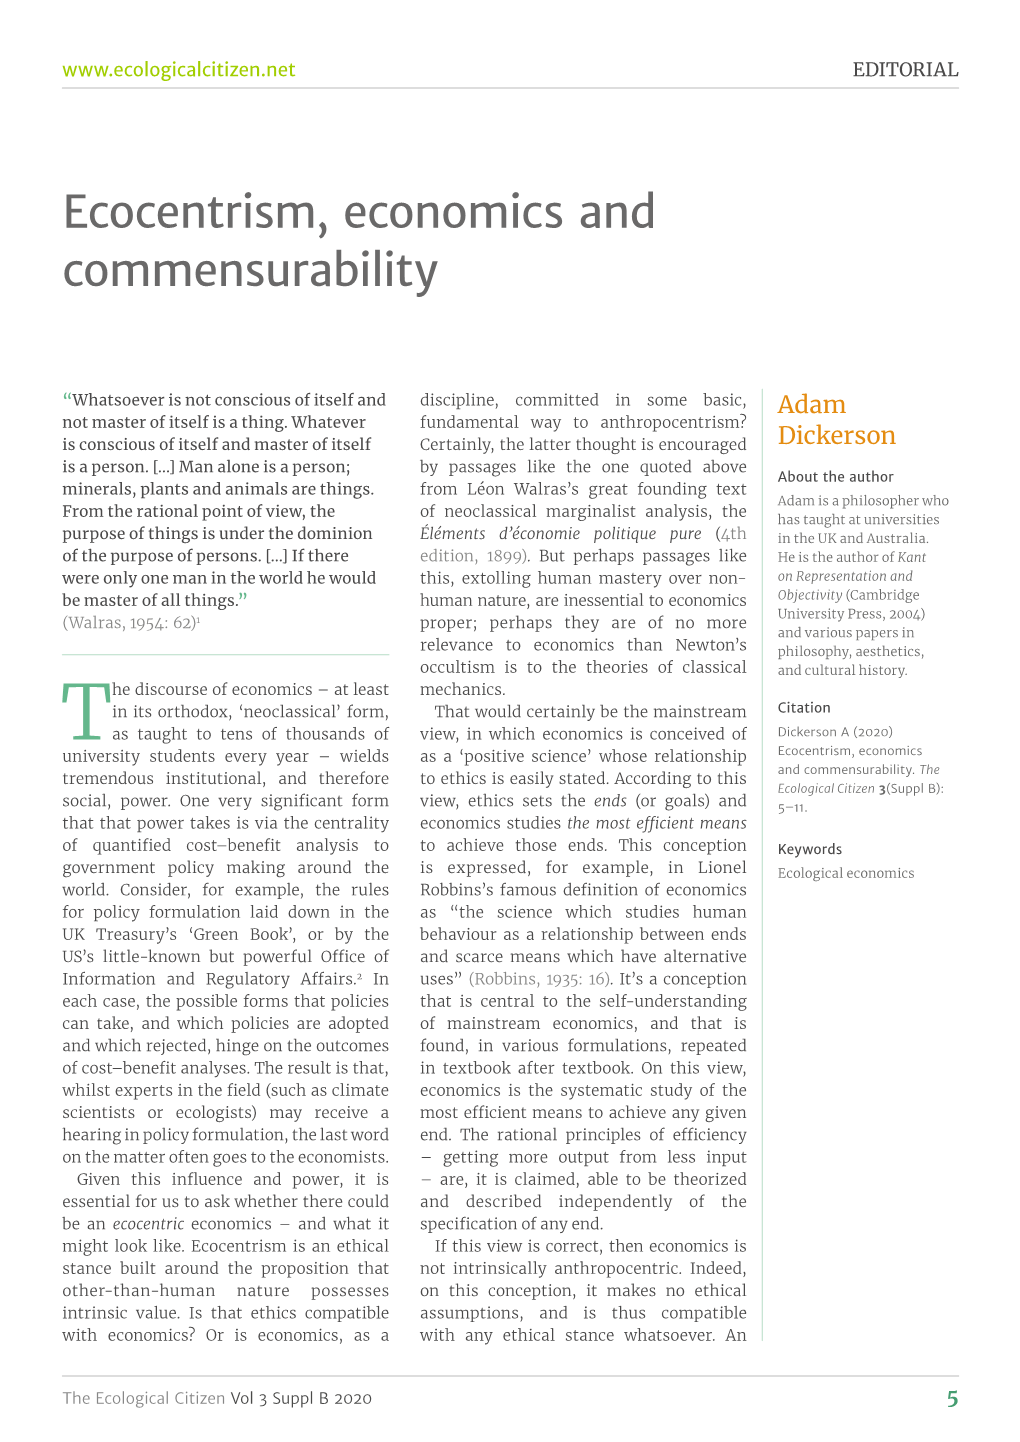 Ecocentrism, Economics and Commensurability